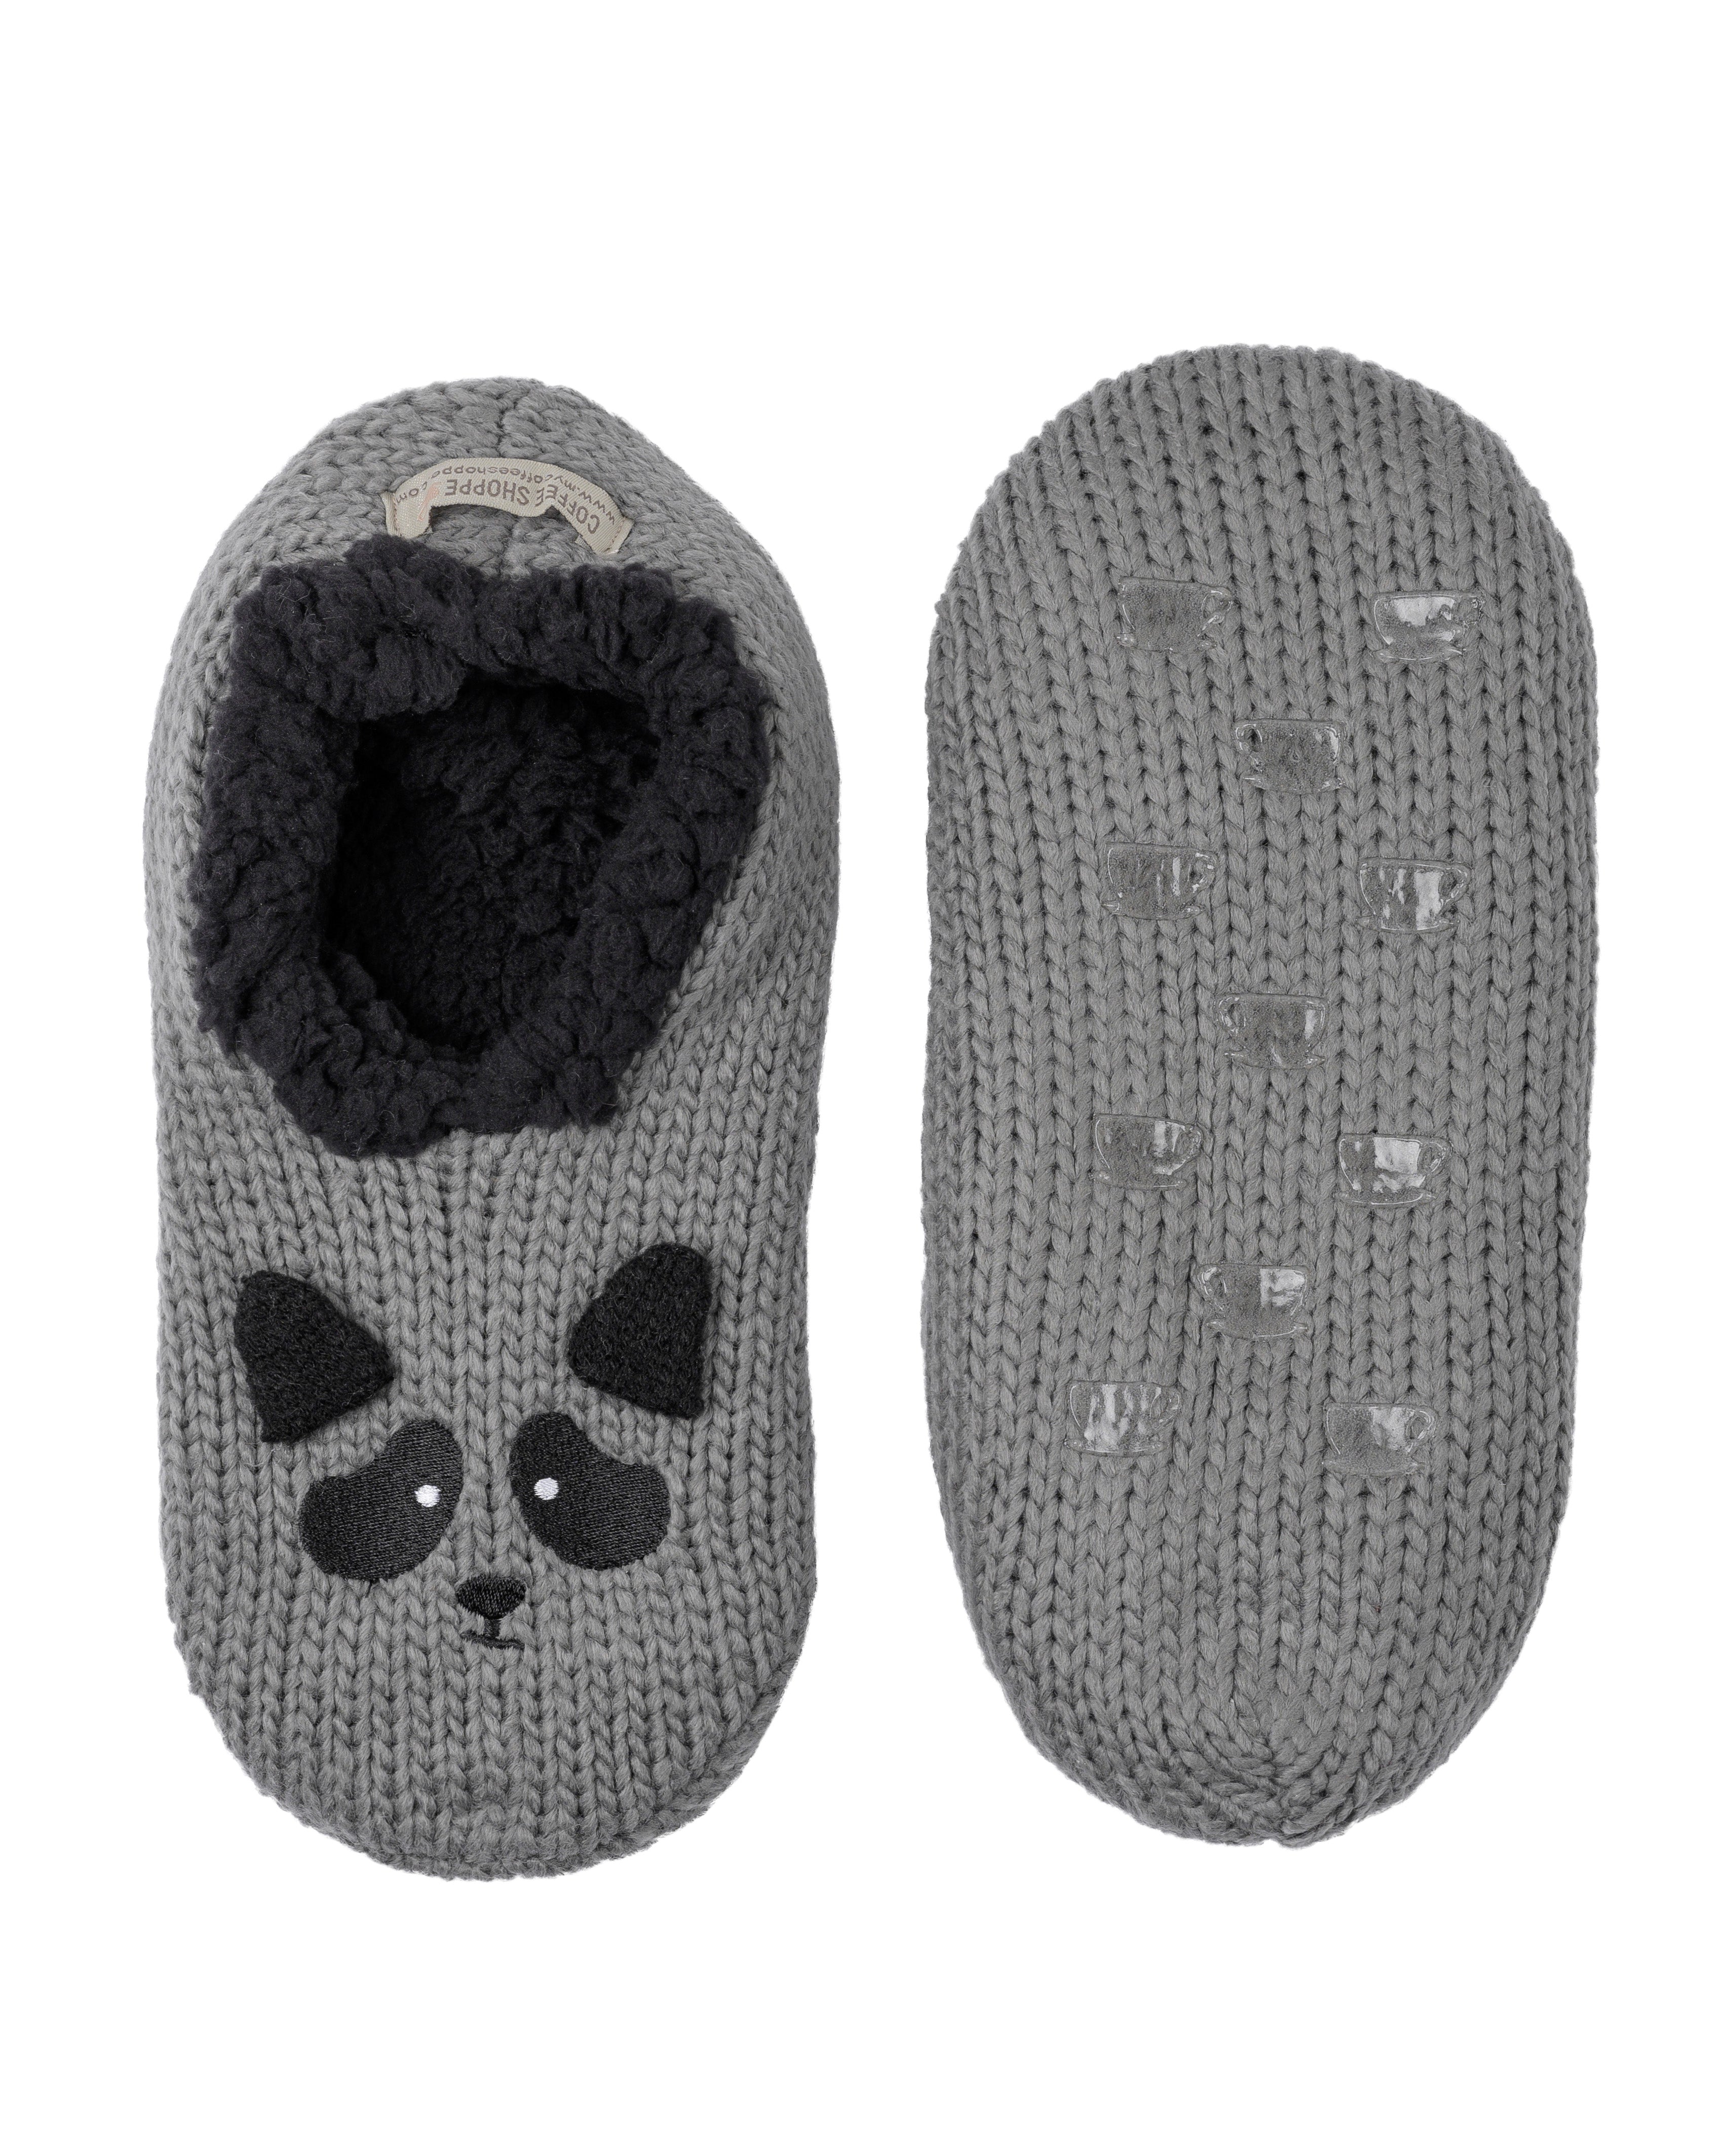 Raccoon Critter Slippers